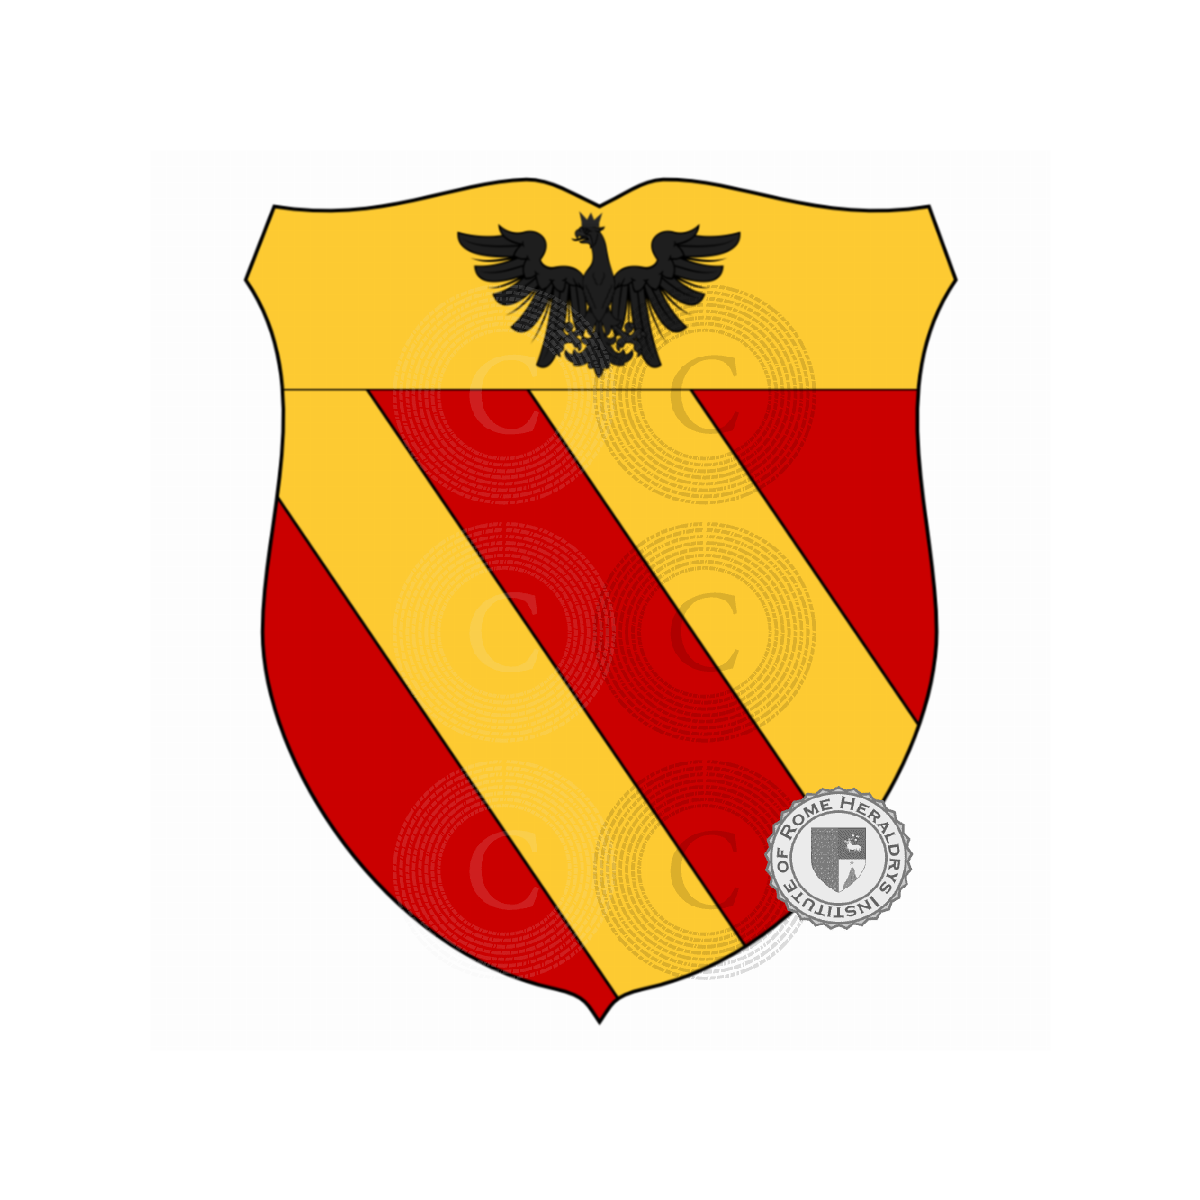 Coat of arms of familyCalzolari